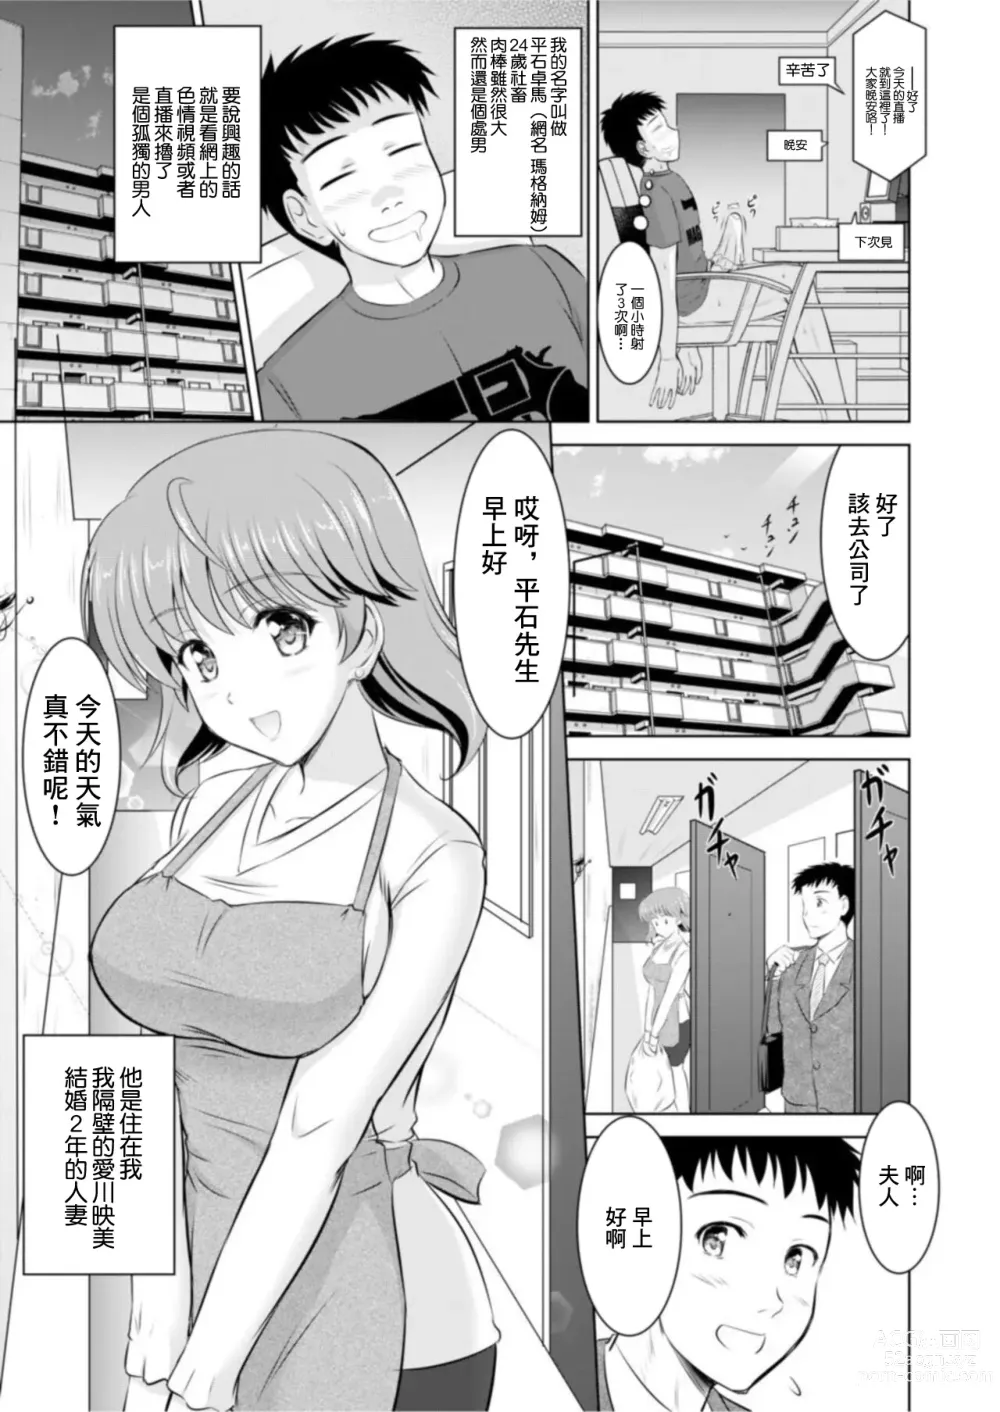 Page 5 of doujinshi 隔壁人妻對於Cosplay做愛非常擅長...